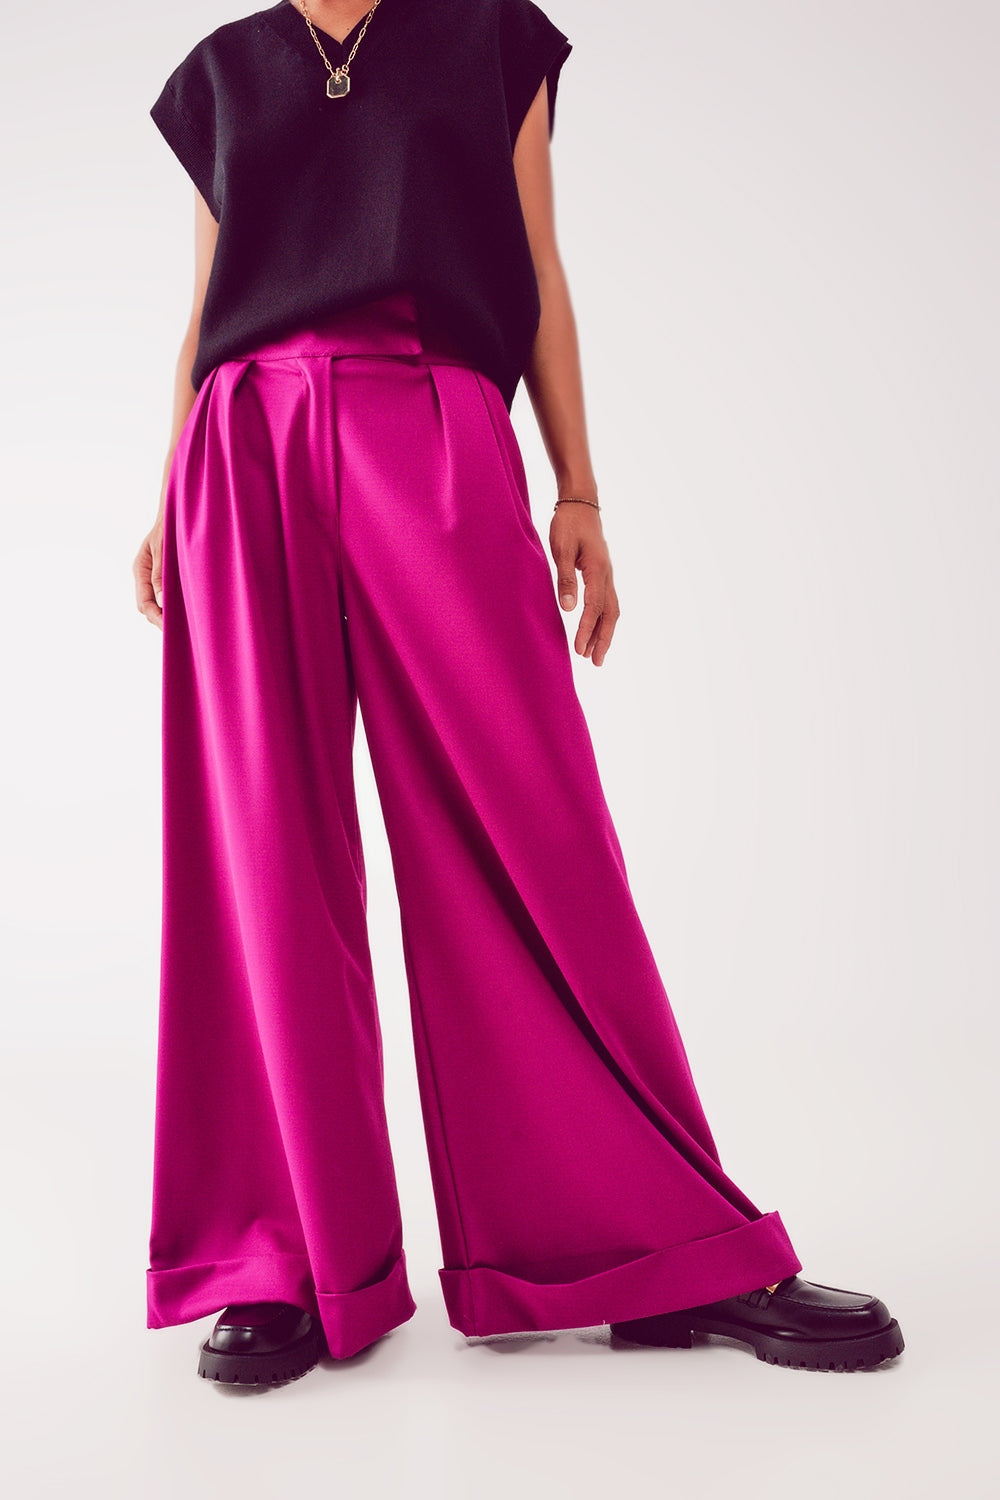 Saint Genies tailored wide leg trouser in hot pink | ASOS